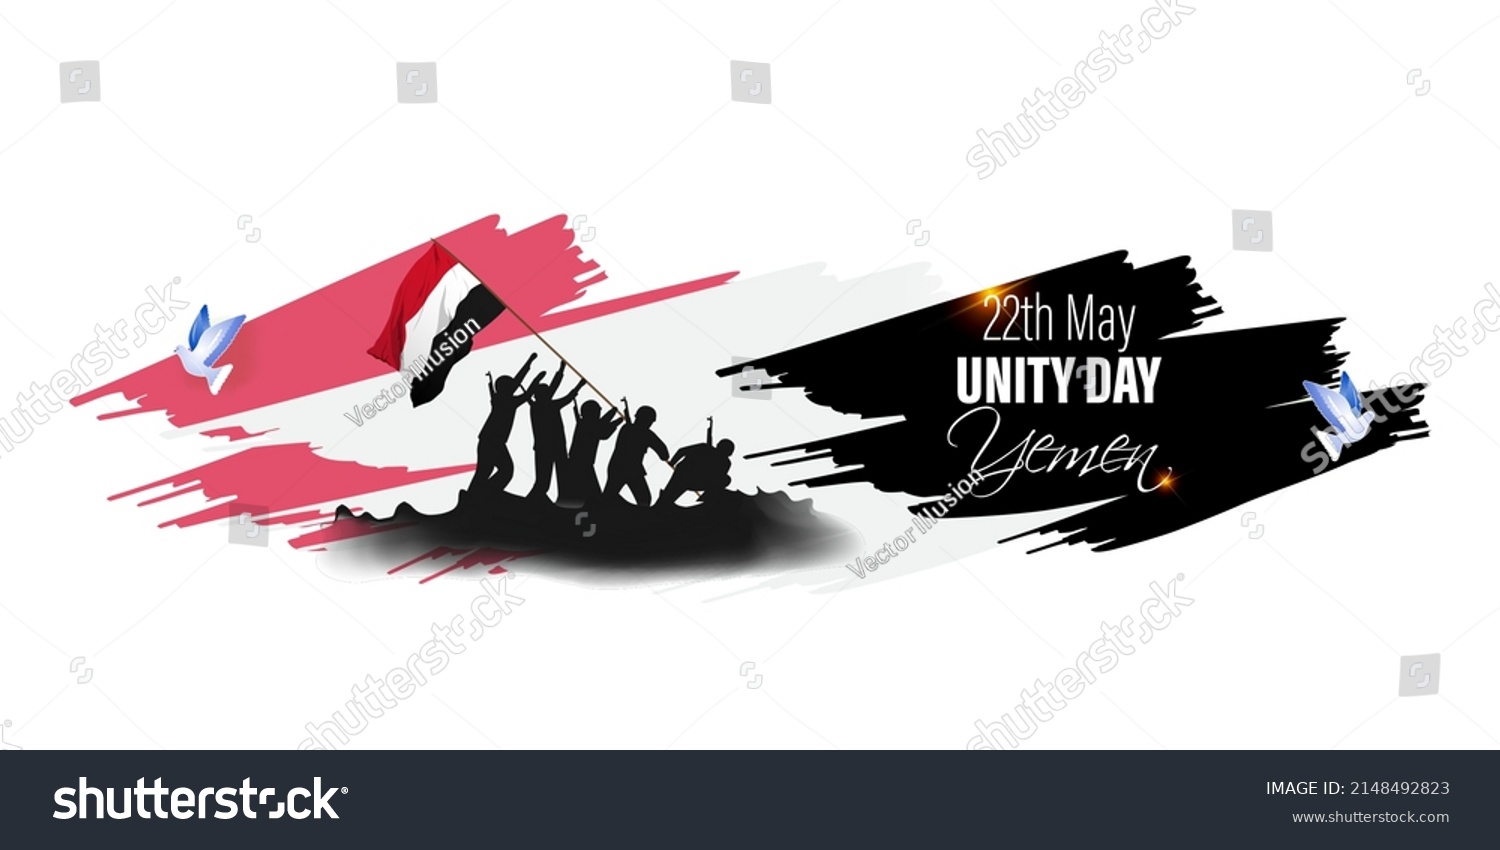 SVG of Vector illustration for Happy Unity Day Yemen. svg